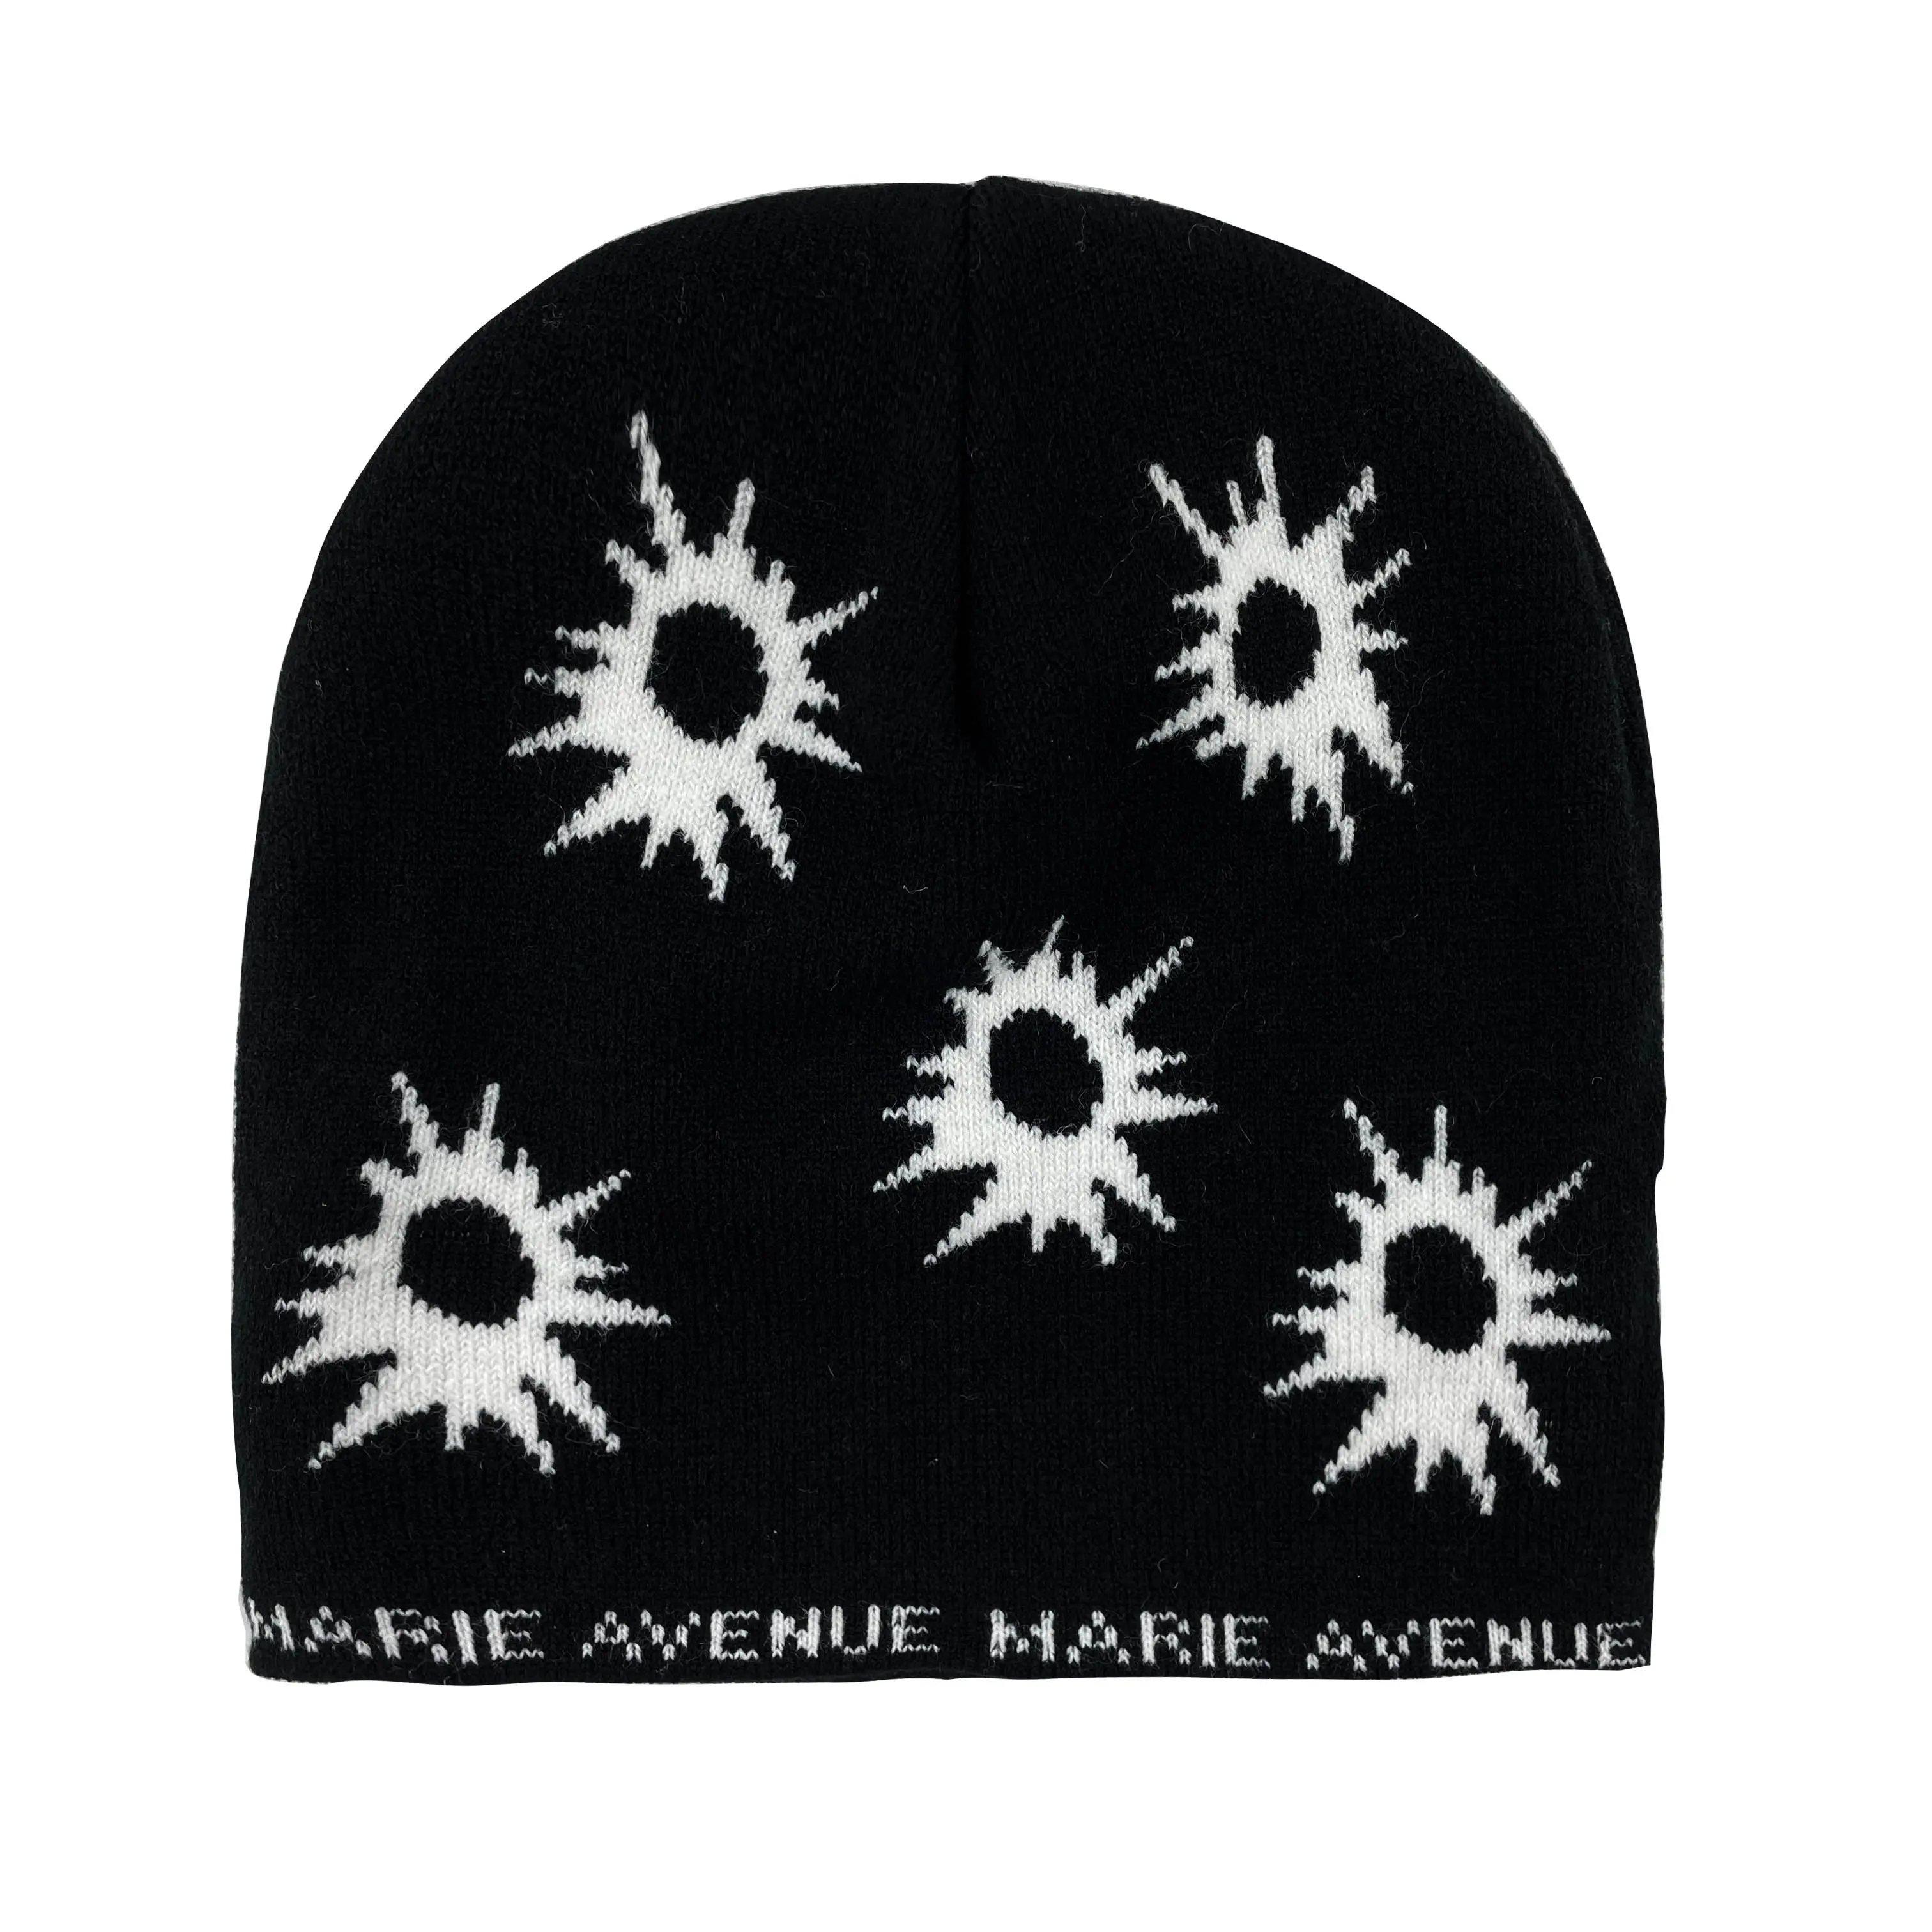 Touca de inverno personalizada, gorro de malha personalizado com chapéu de marca de designer